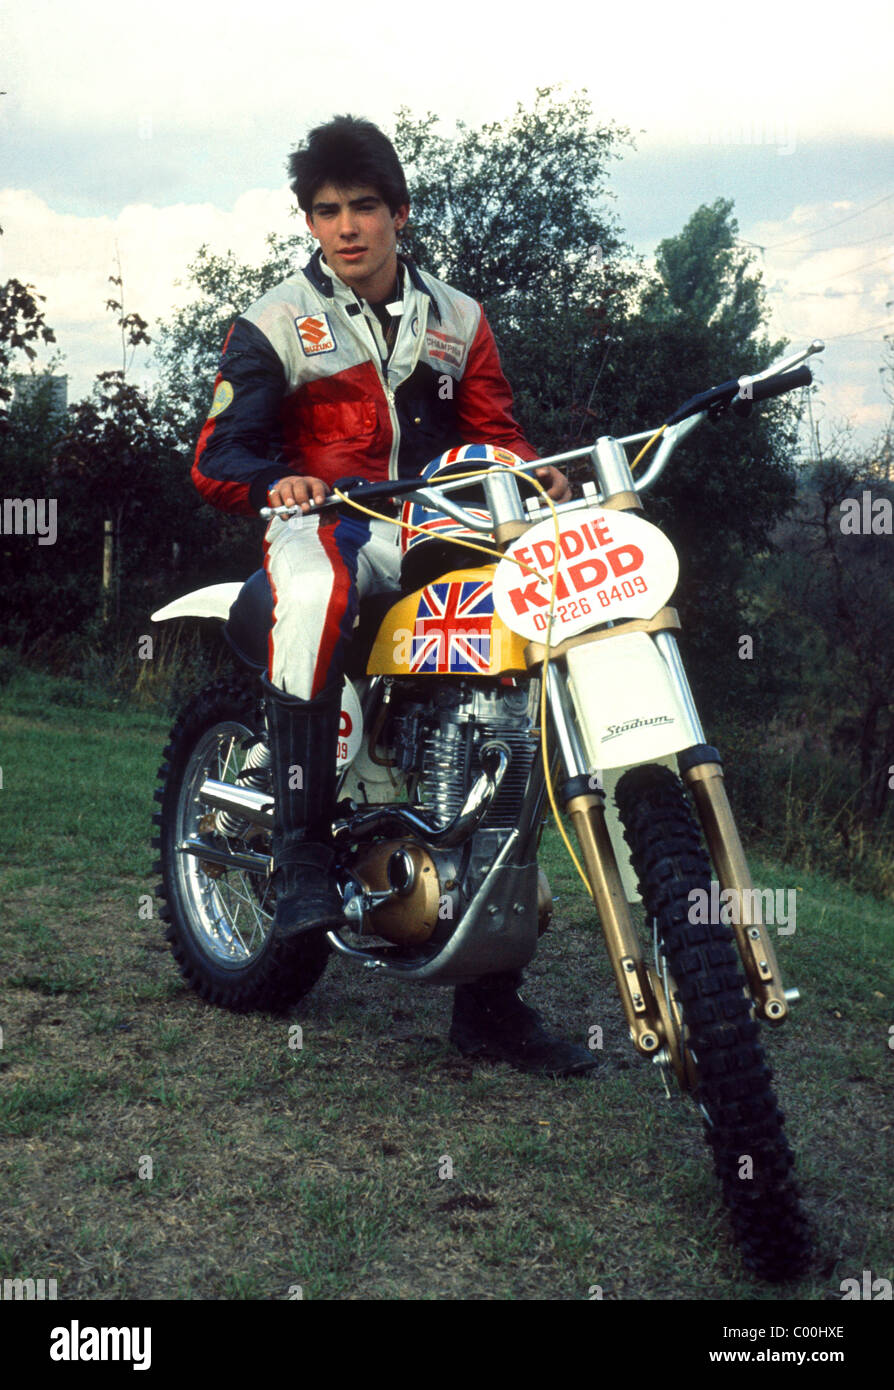 EDDIE KIDD MOTORCYCLE STUNTMAN (1978 Stock Photo - Alamy